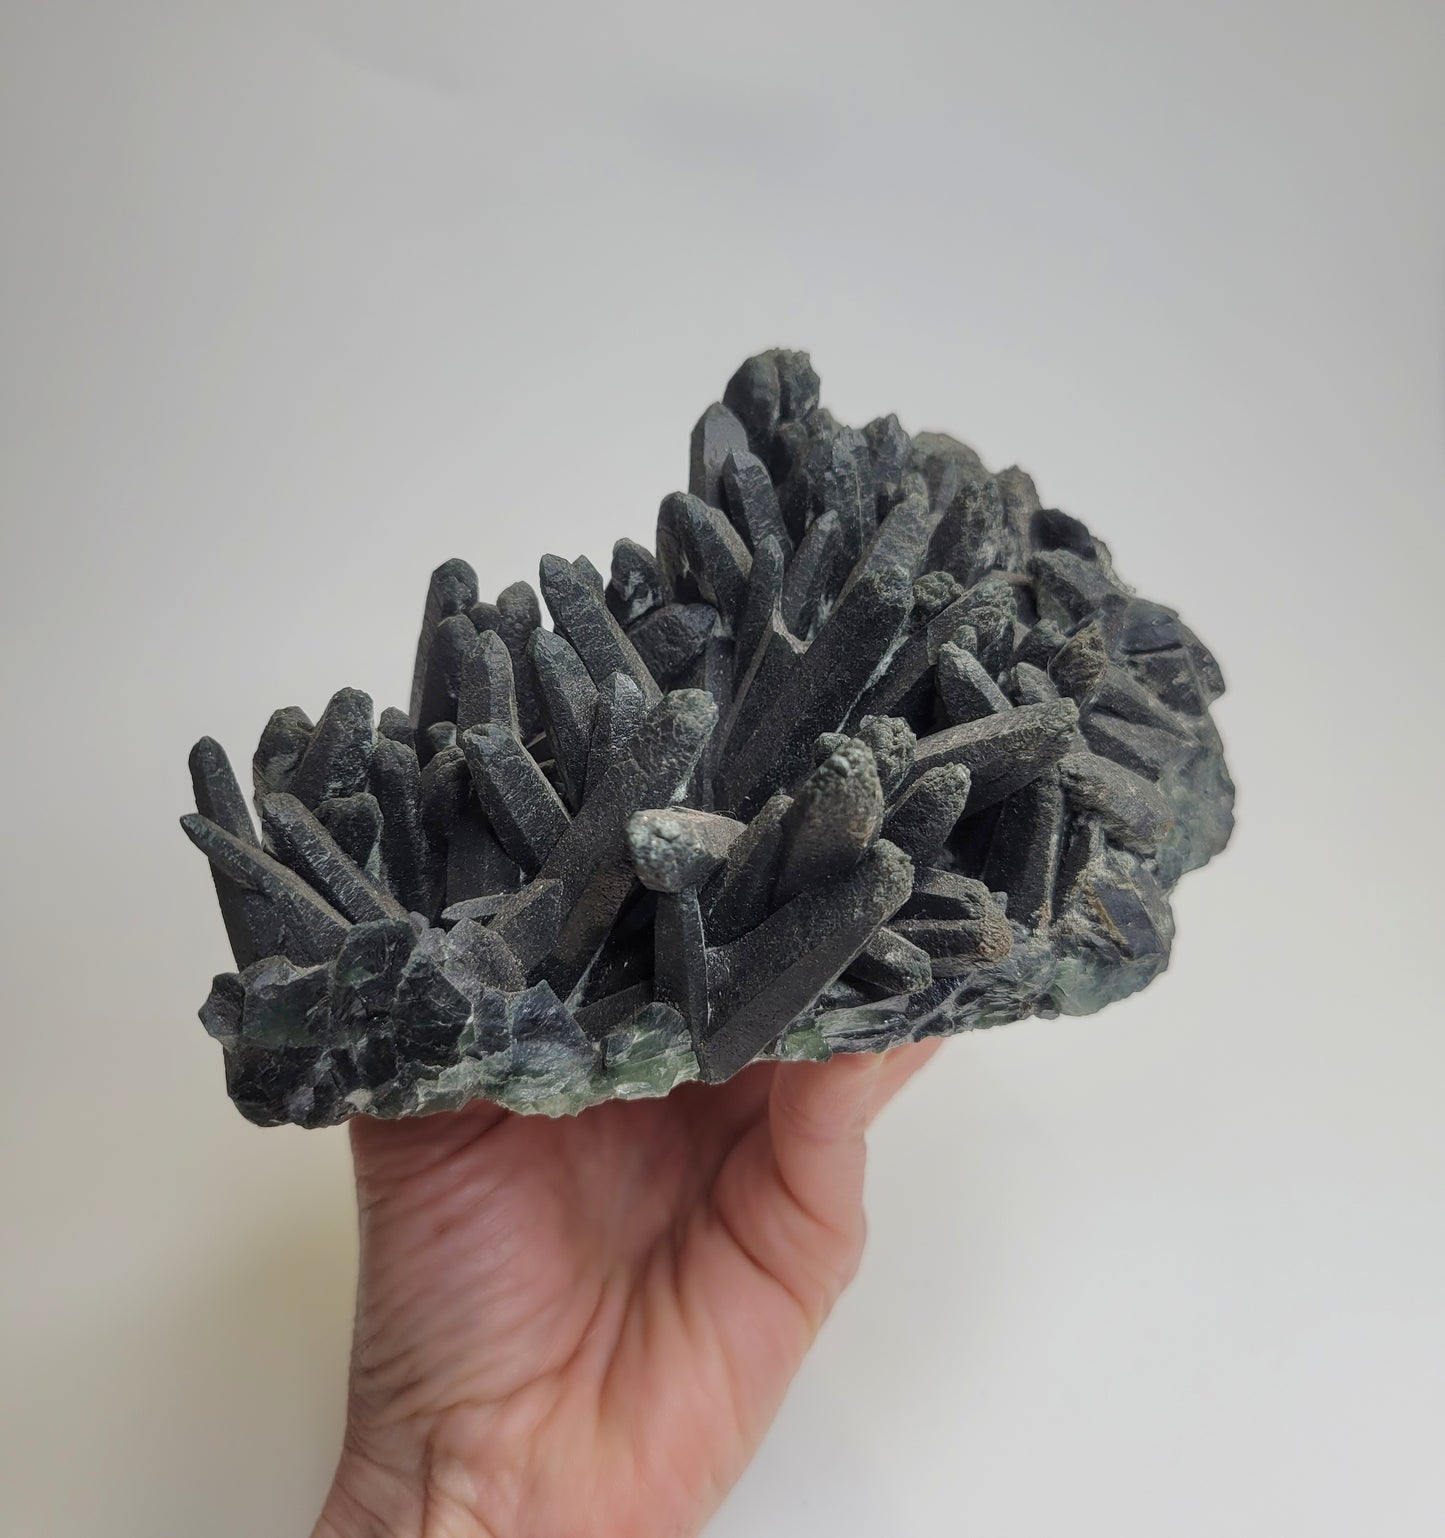 Hedenbergite Quartz Cluster from Mongolia, China